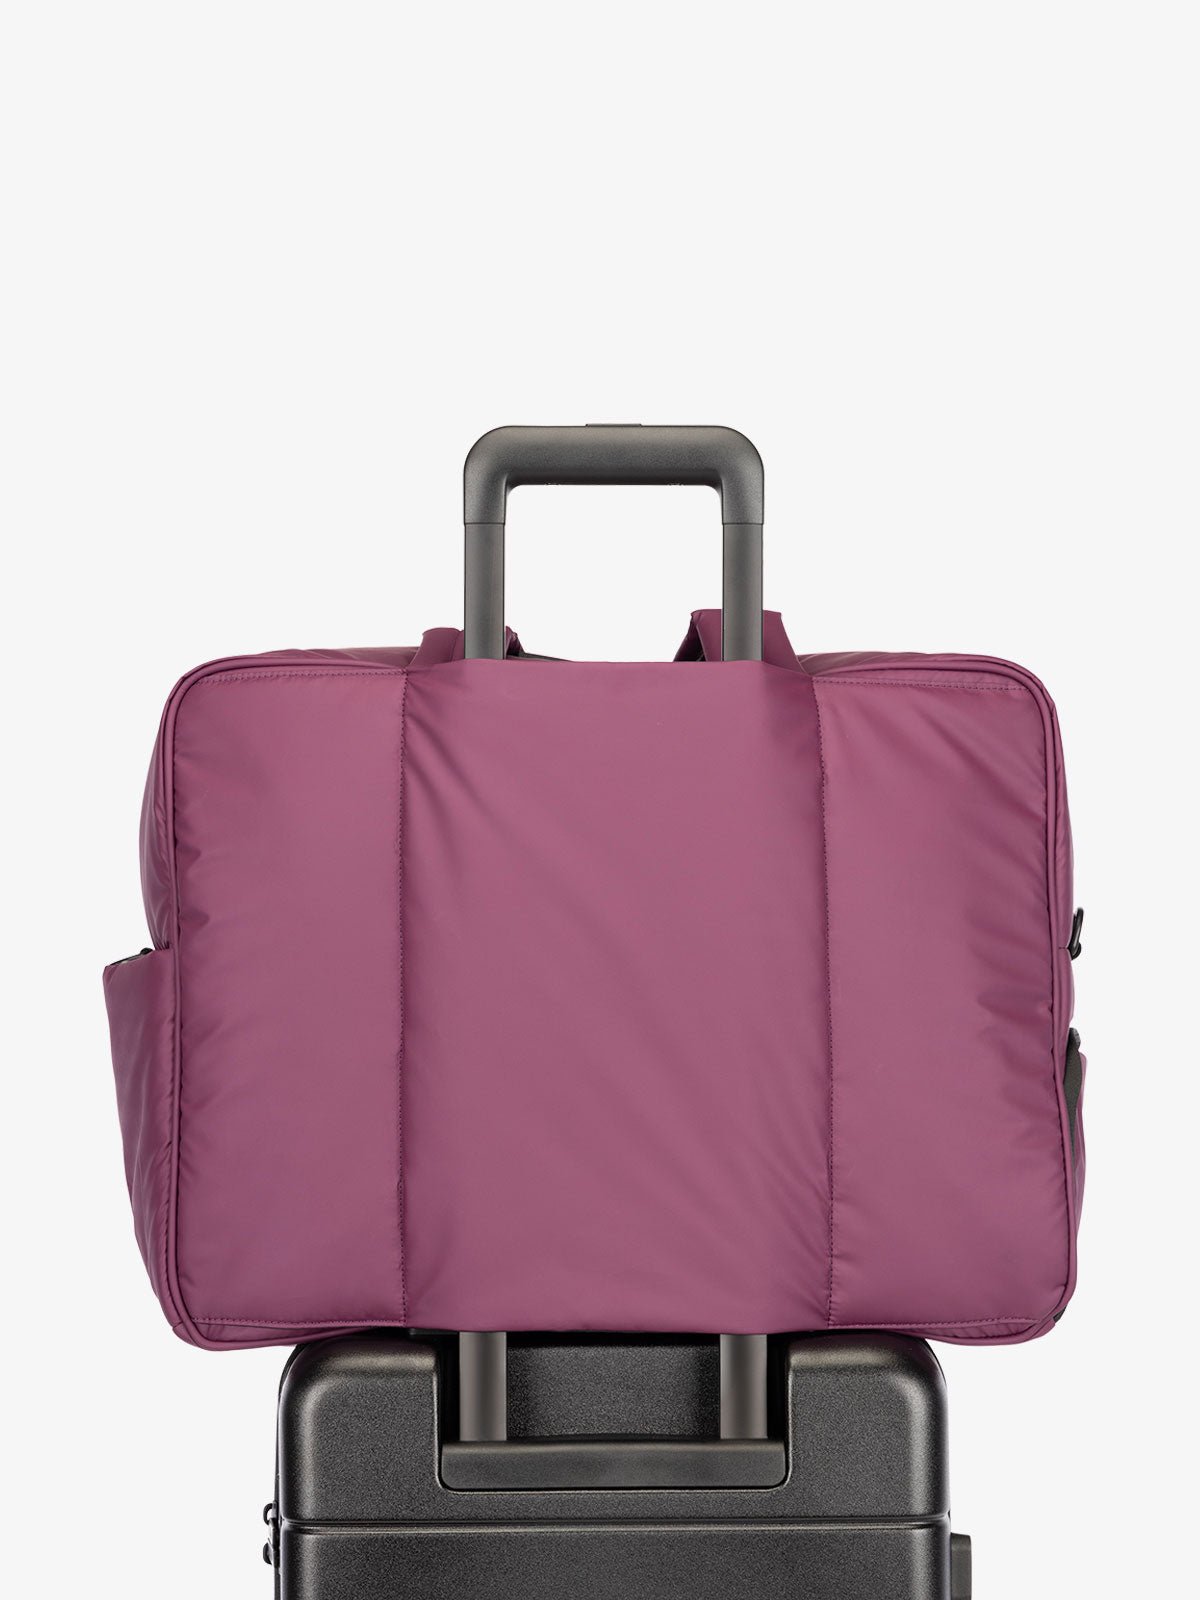 CALPAK Luka large travel duffel bag with trolley sleeve for luggage in purple plum